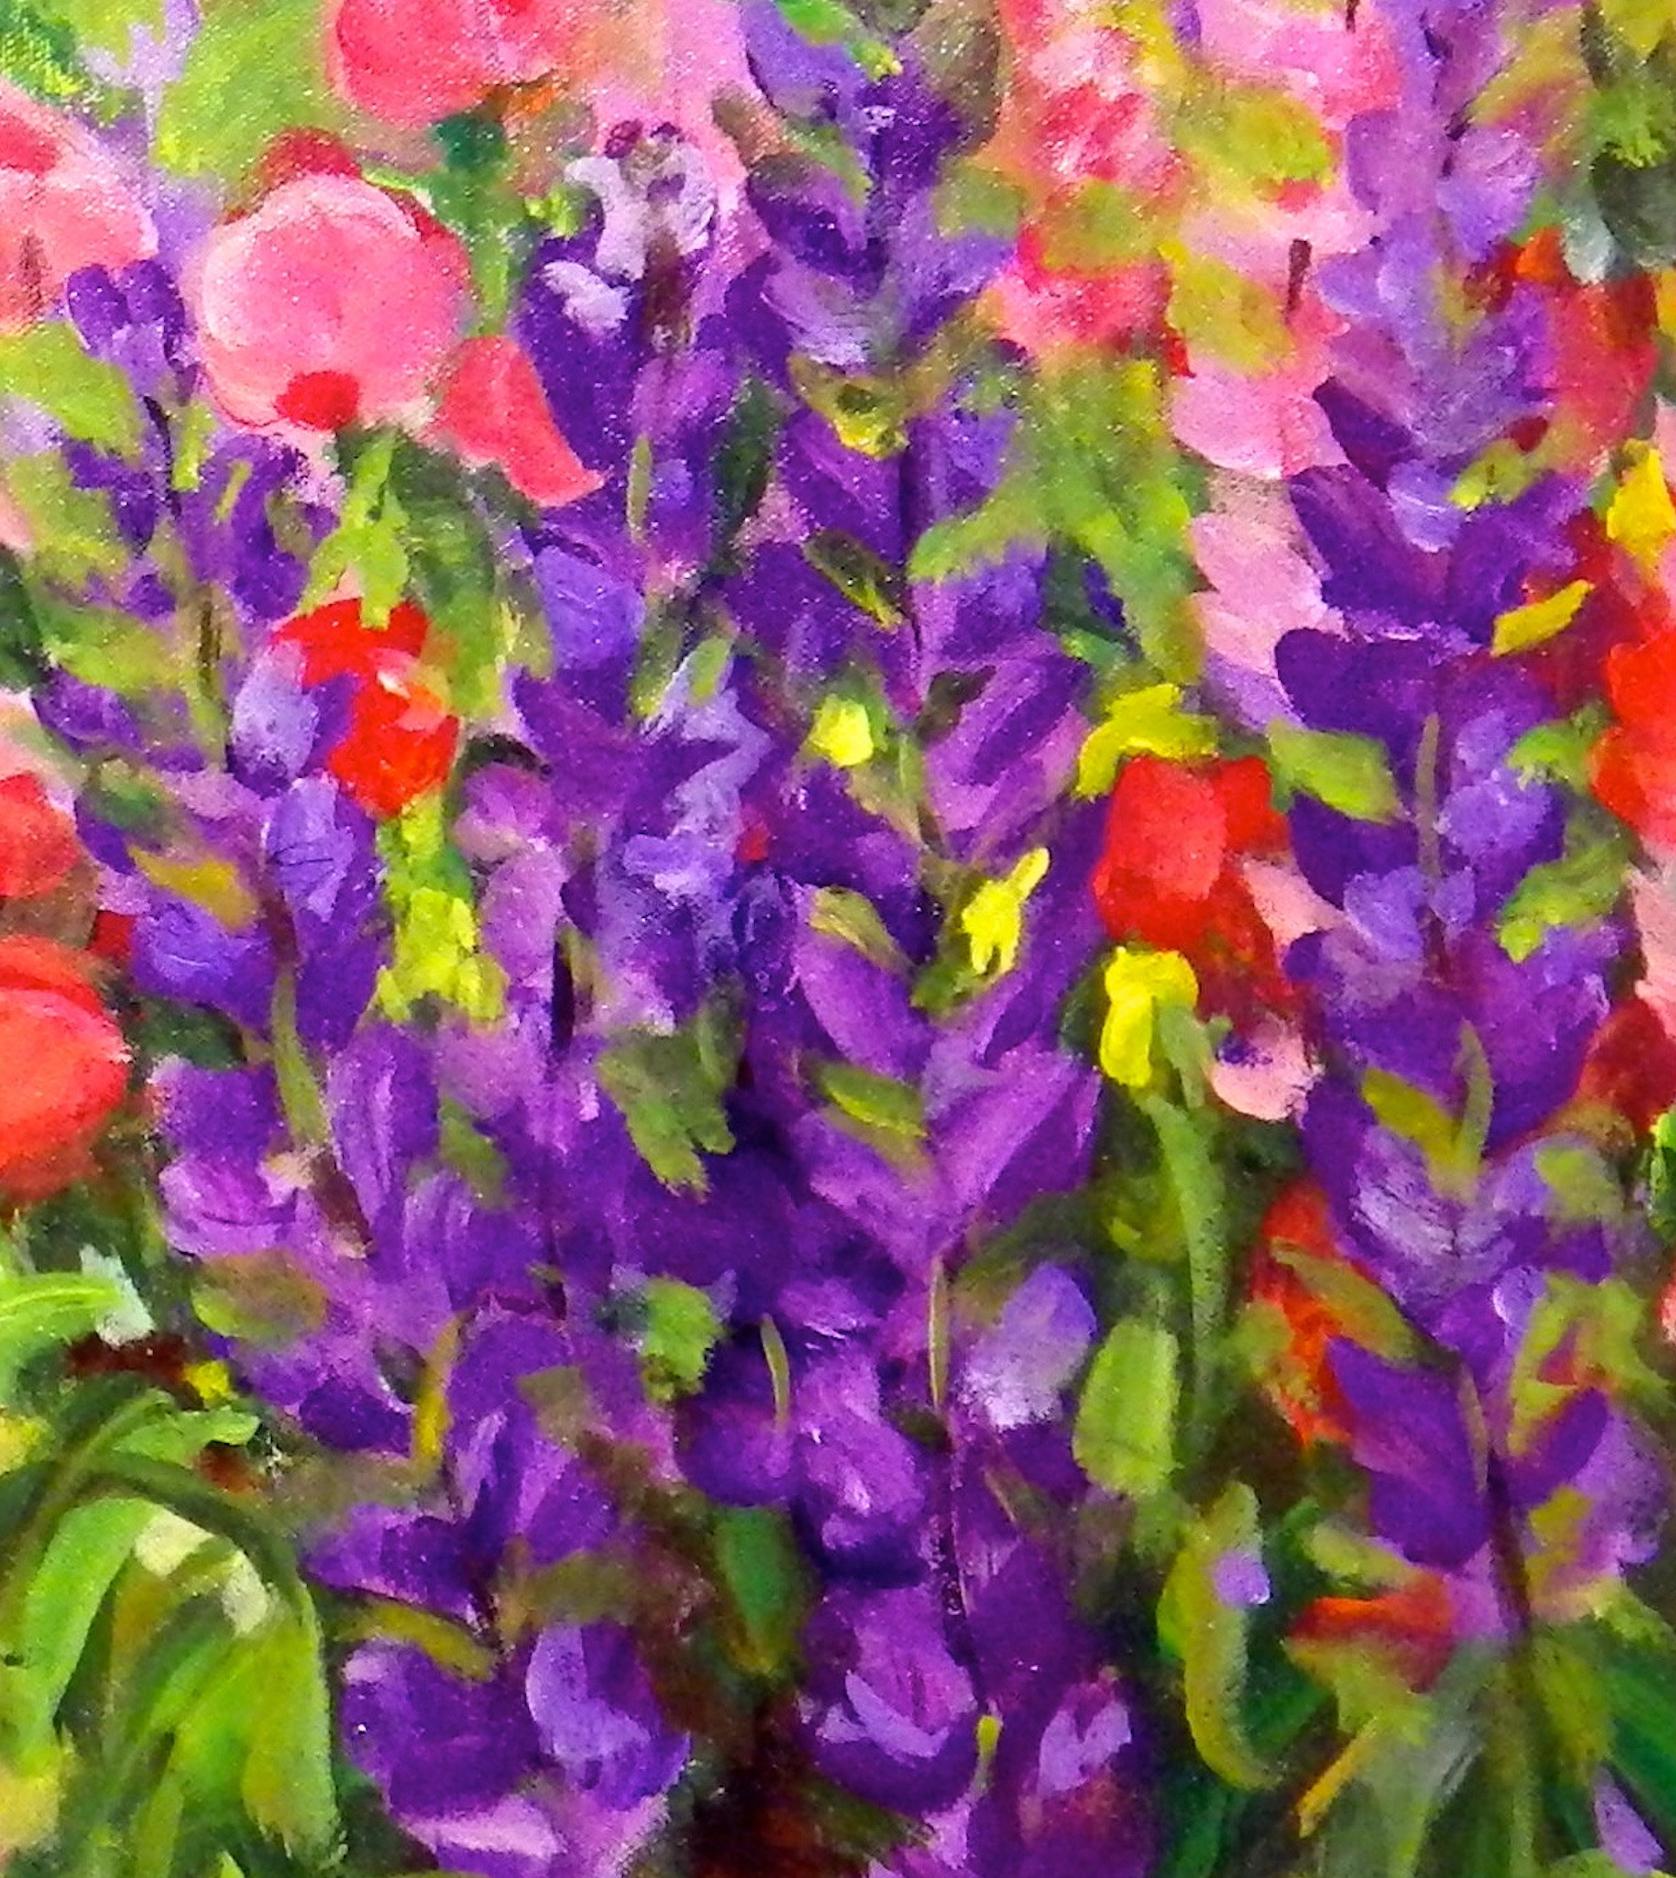 Monroe Card, Original Contemporary Impressionist Floral Landscape Painting
30